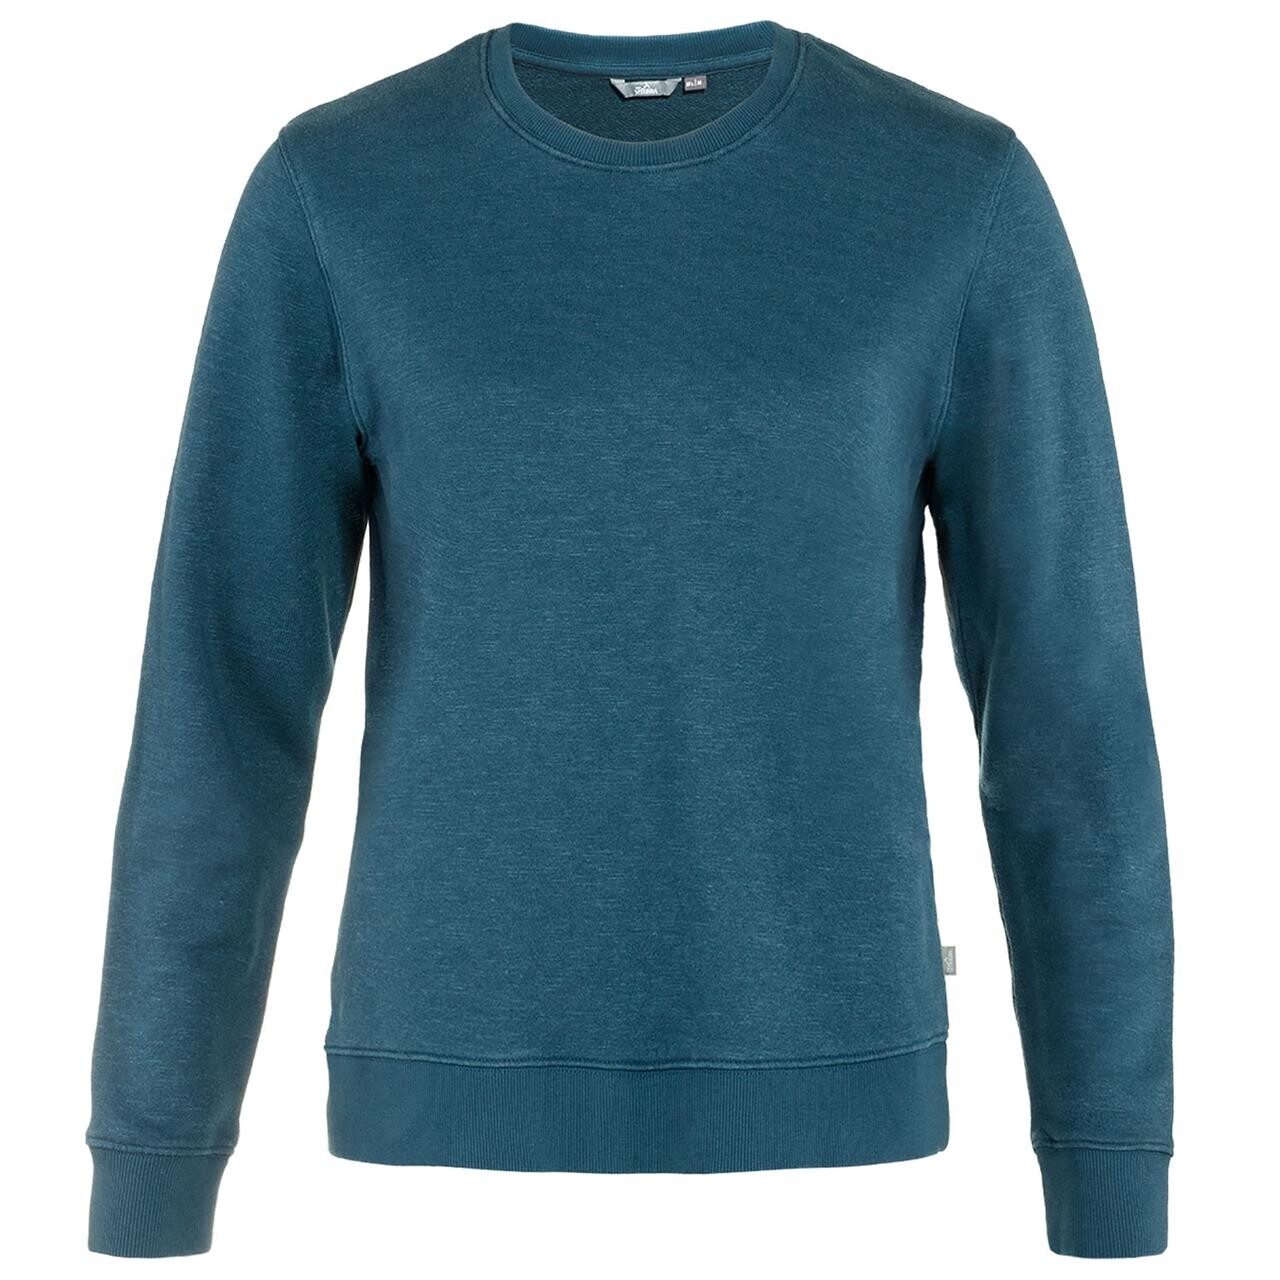 4: Tierra Womens Hempy Sweater  (Blå (MAJOLICA BLUE) Small)